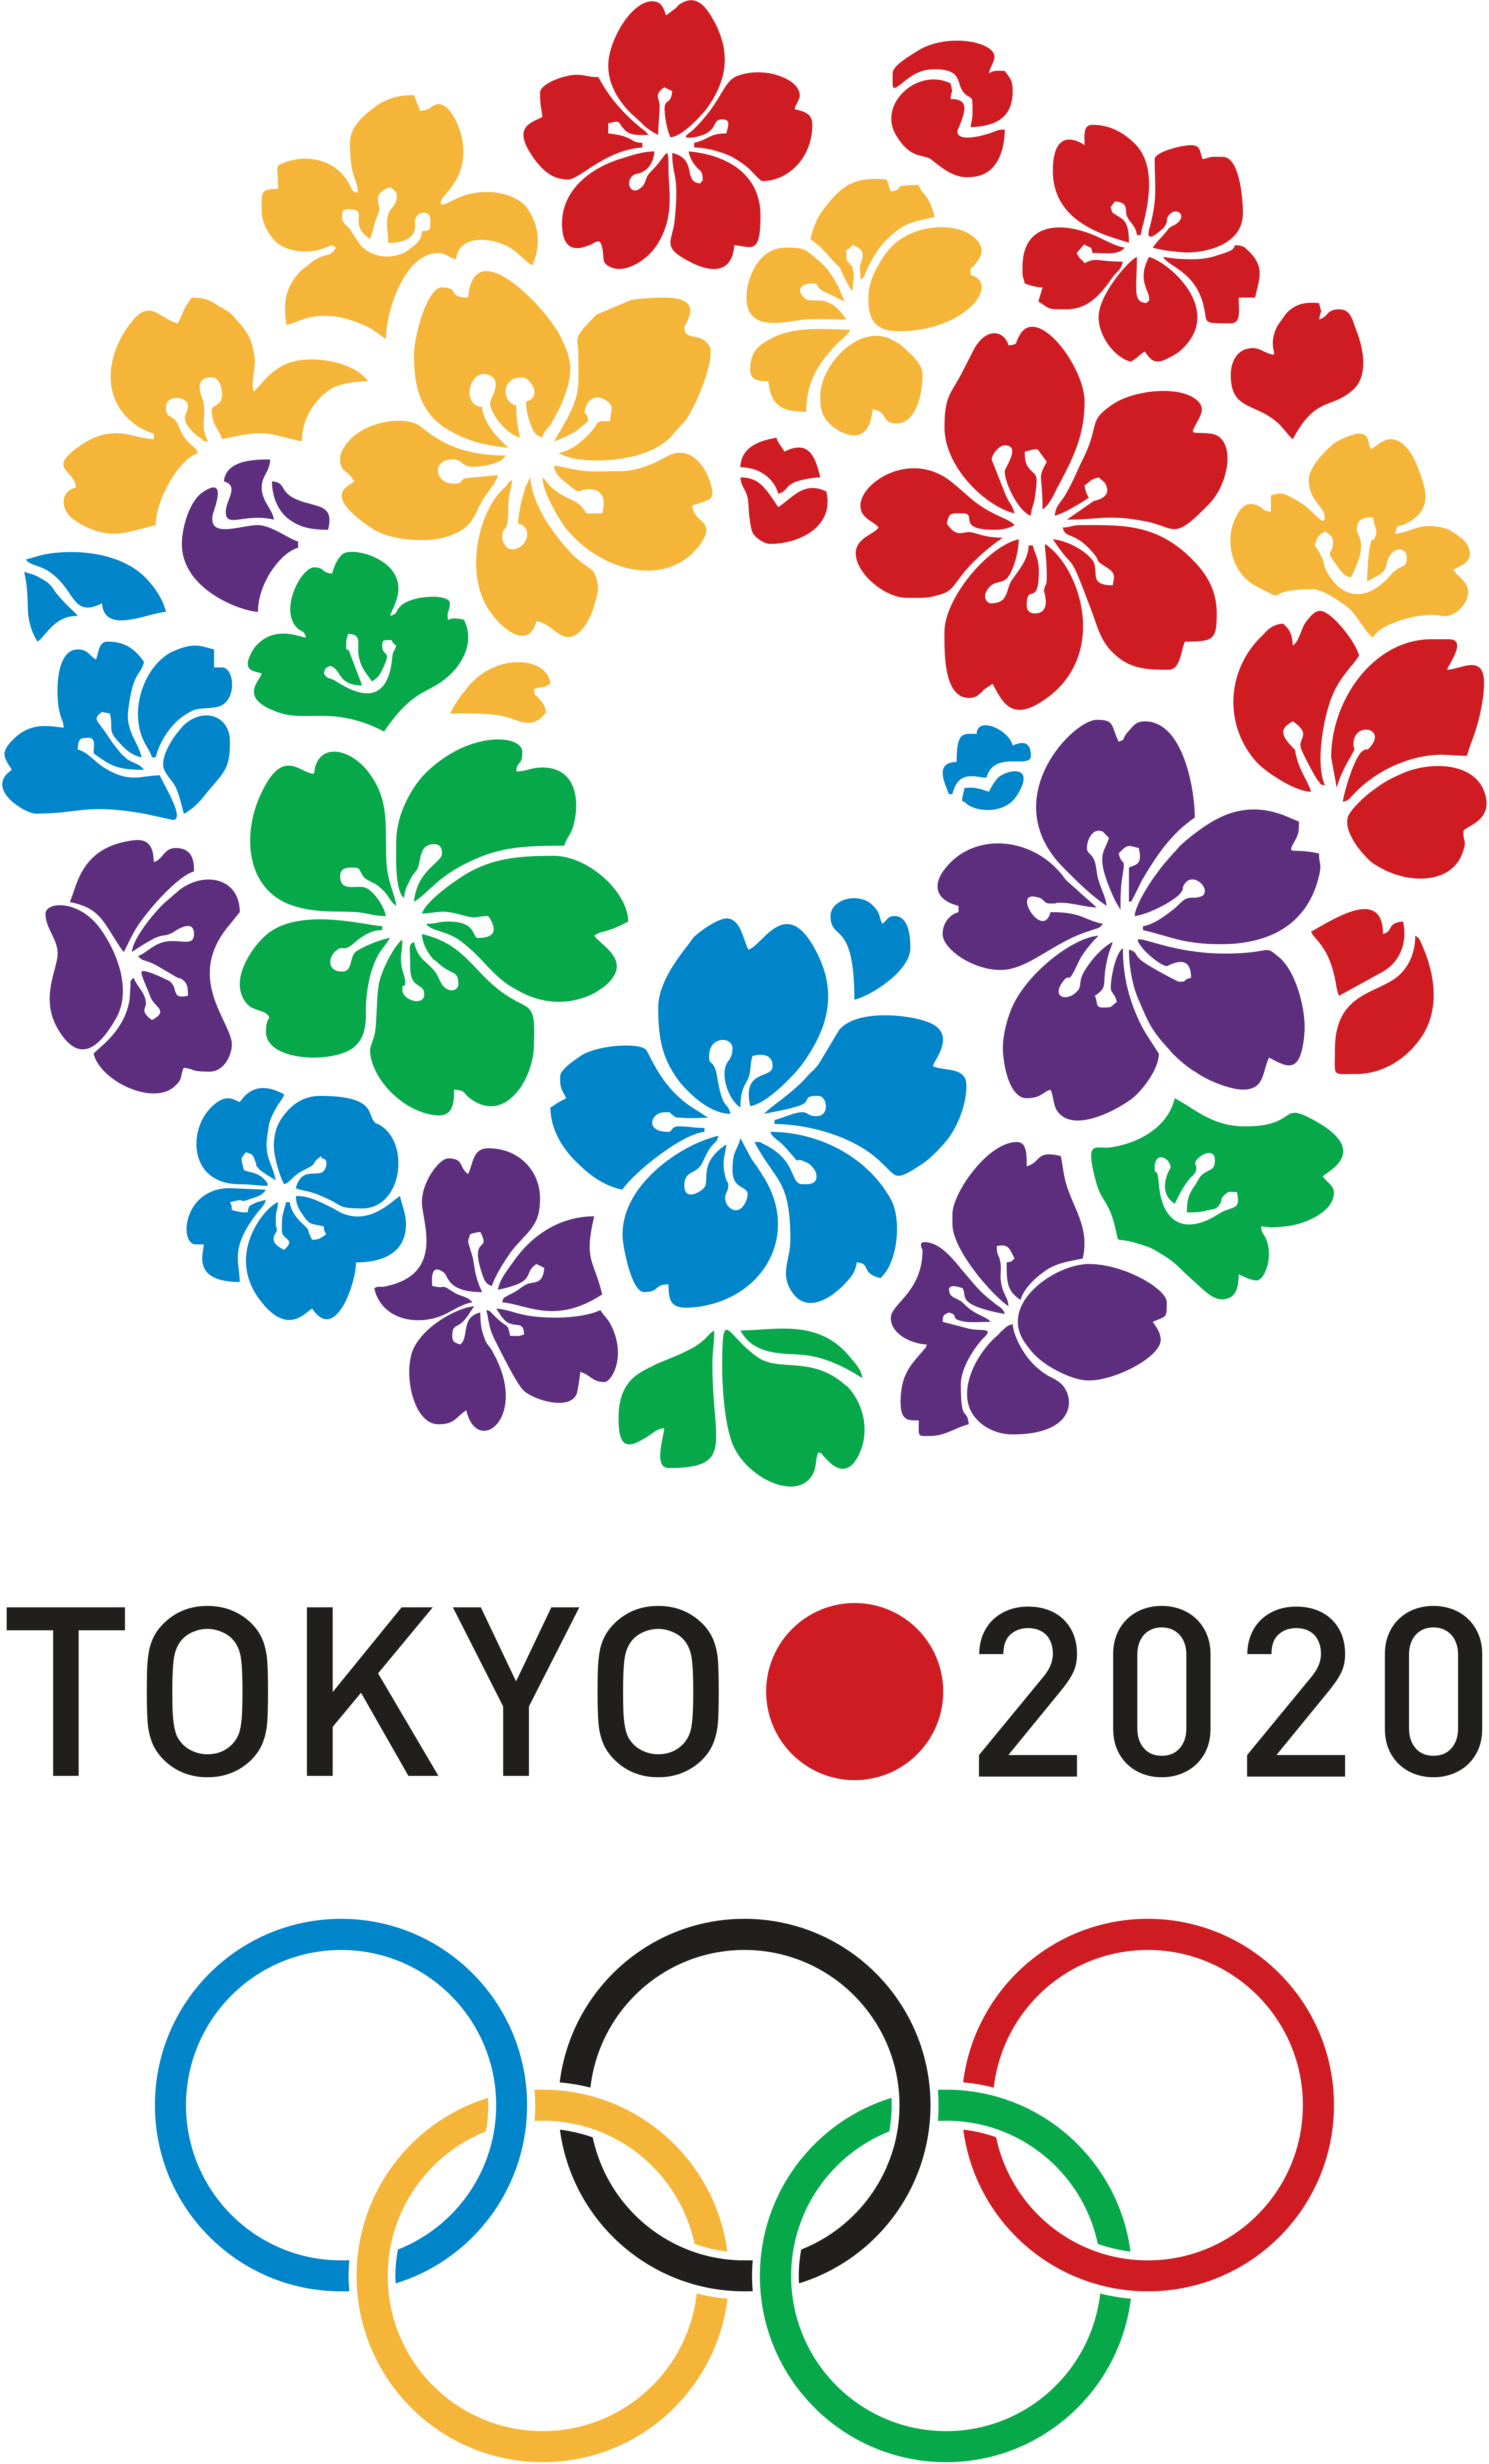 TOKYO 2020 OLYMPICS logo download.